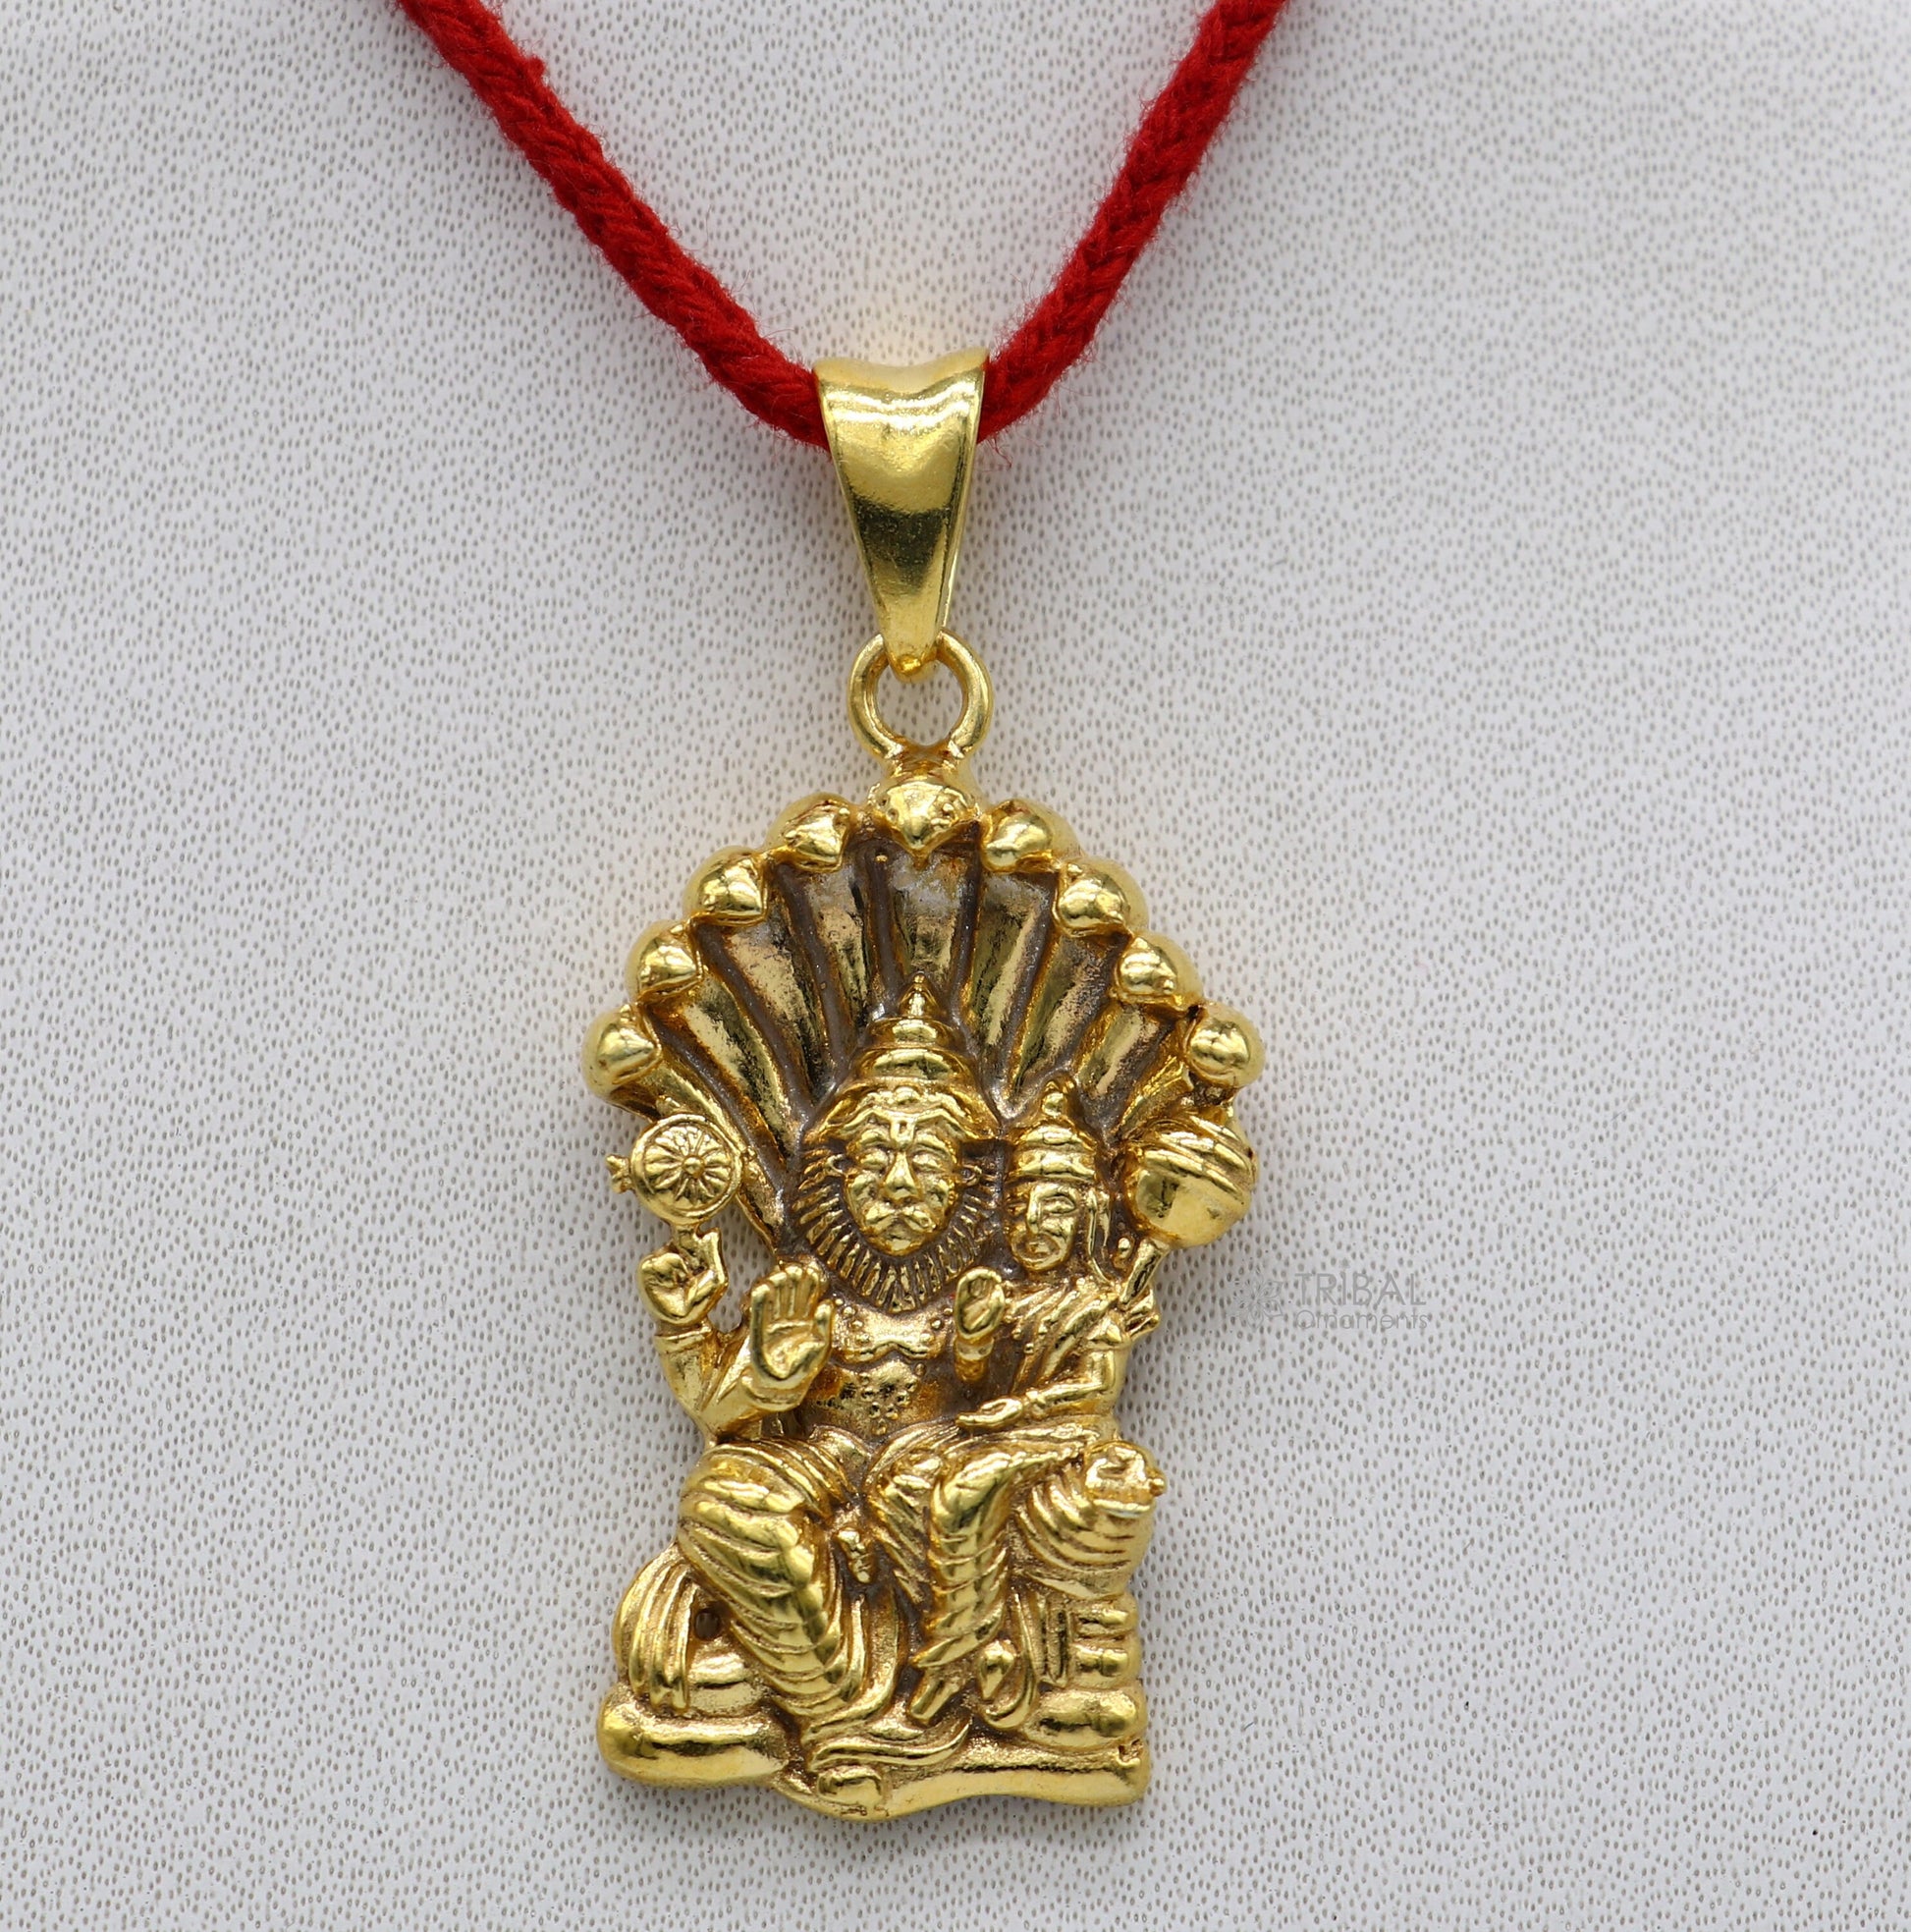 925 sterling silver handmade Vishnu with Laxmi (narsimha)pendant, amazing stylish unisex gold polished pendant personalized jewelry nsp596 - TRIBAL ORNAMENTS